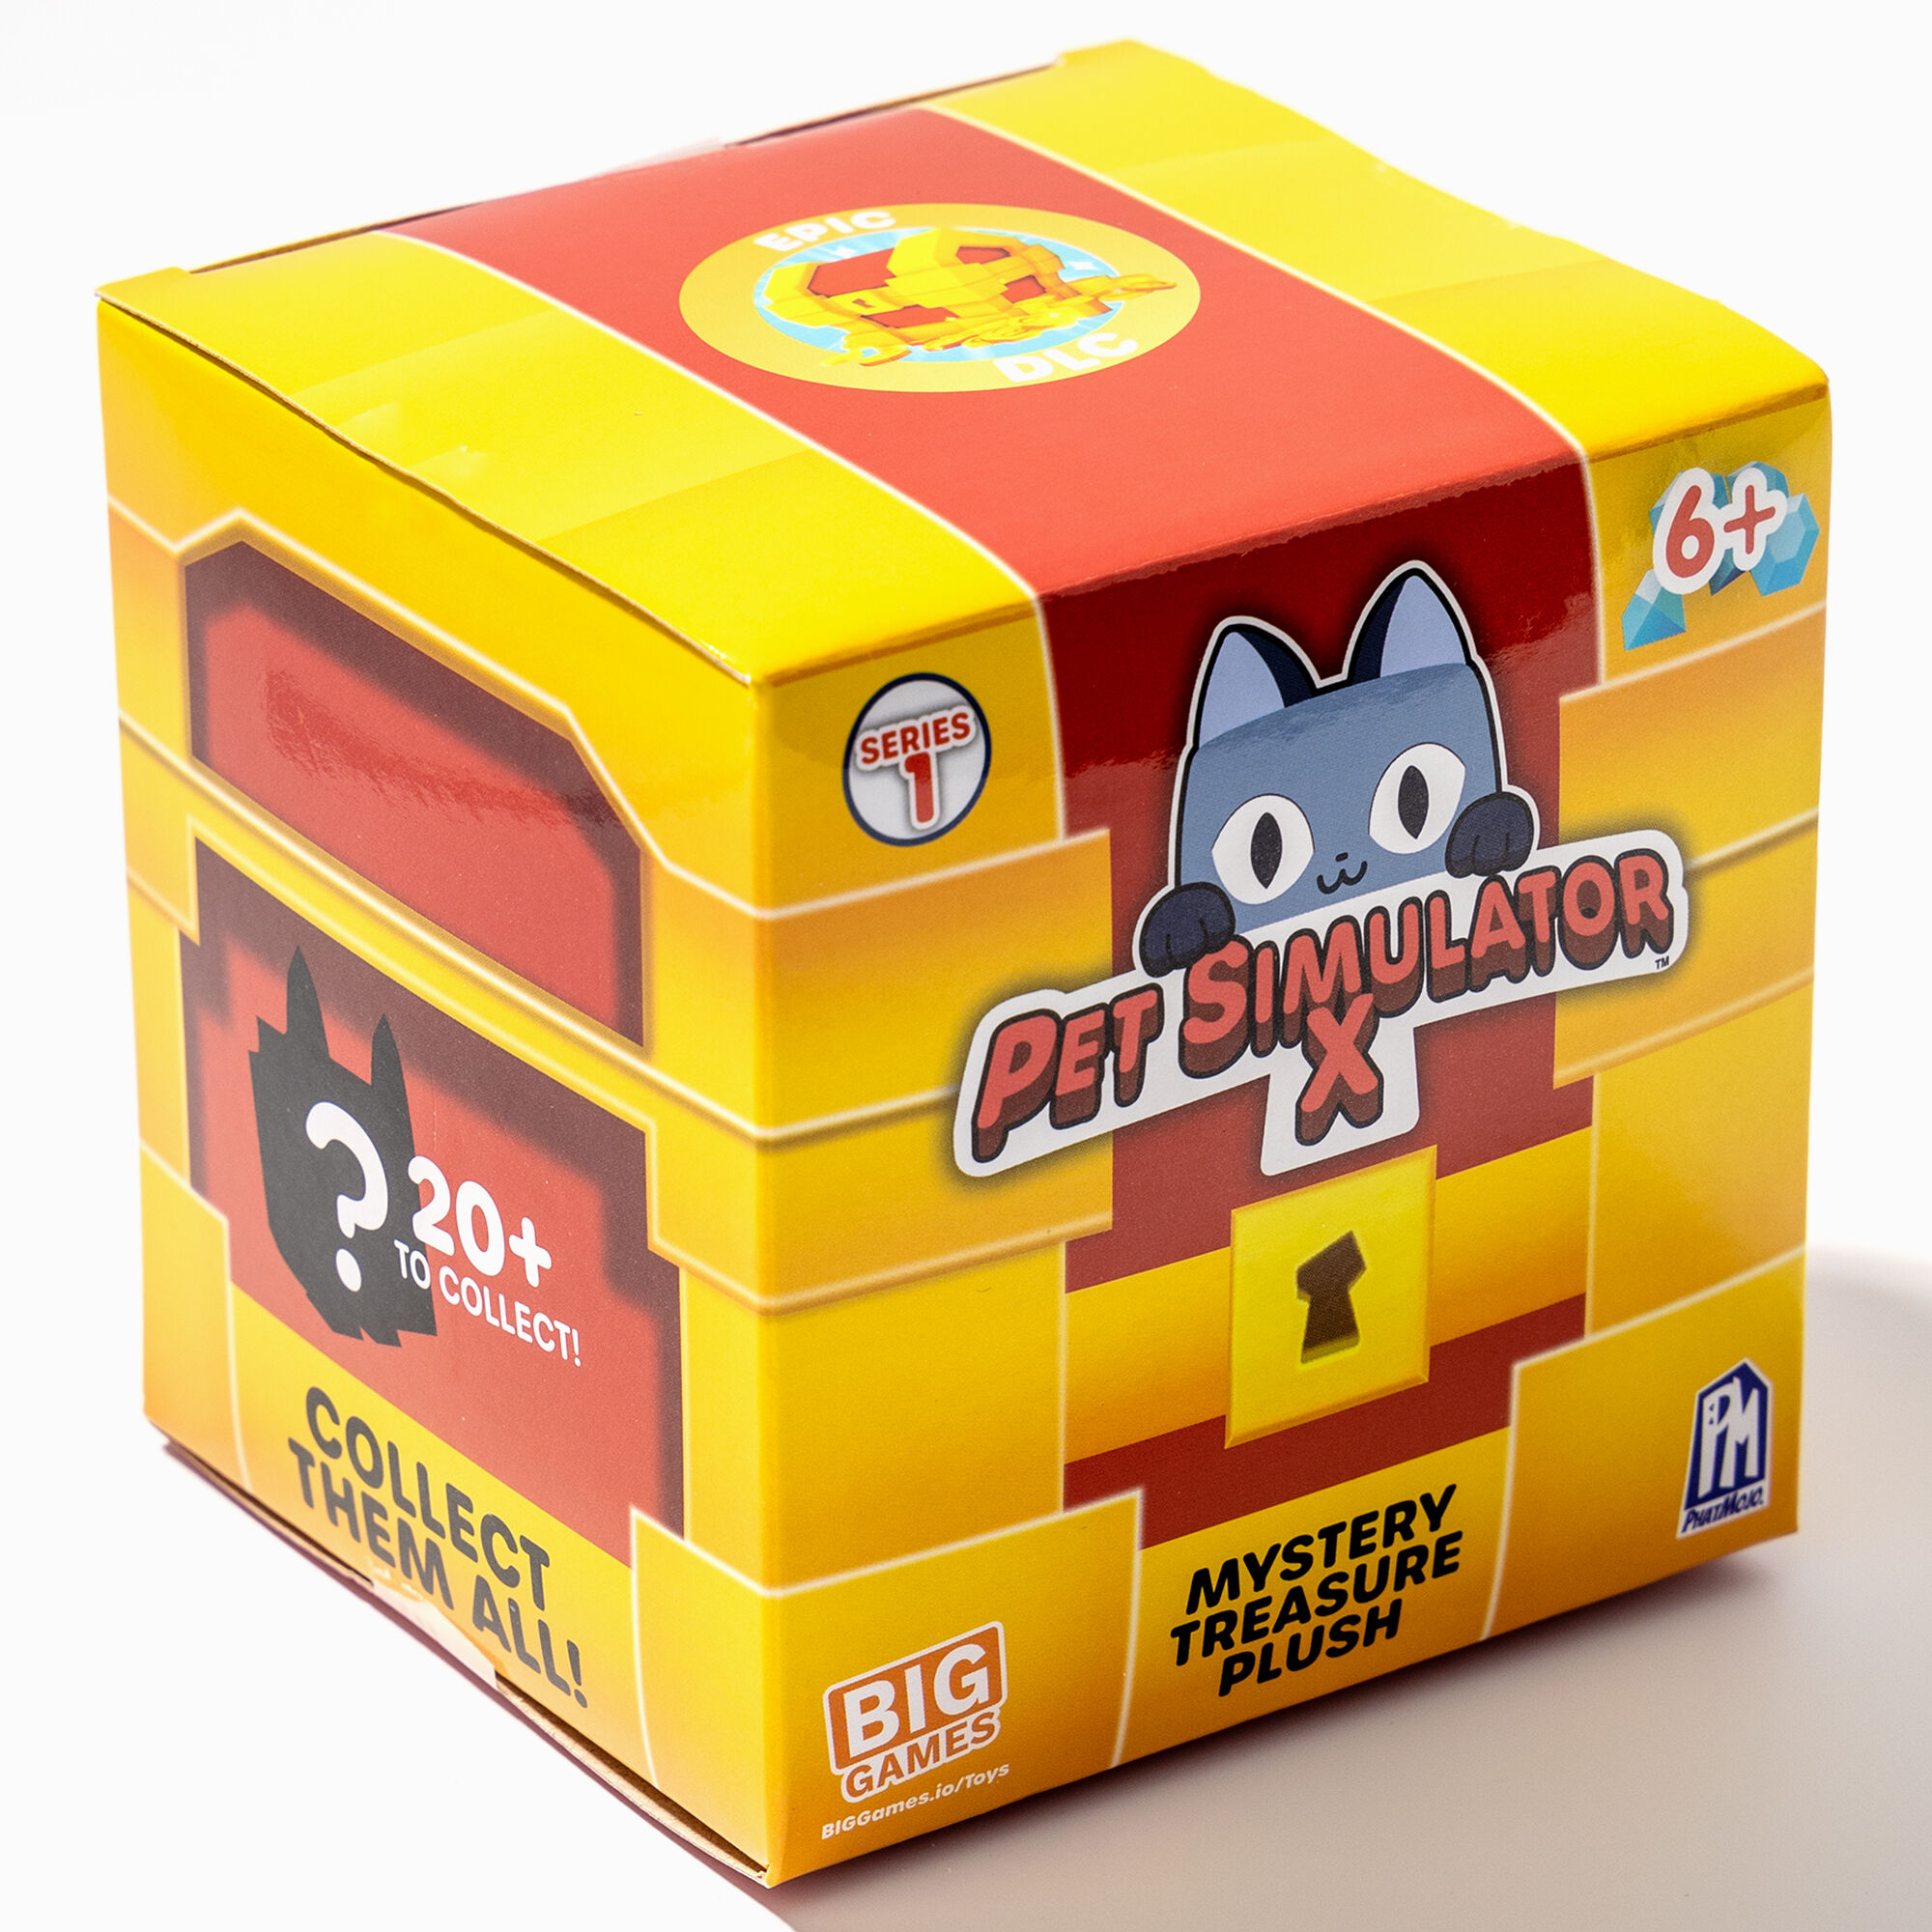 New ROBLOX Pet Simulator X Series 1 Mystery Treasure Plush with